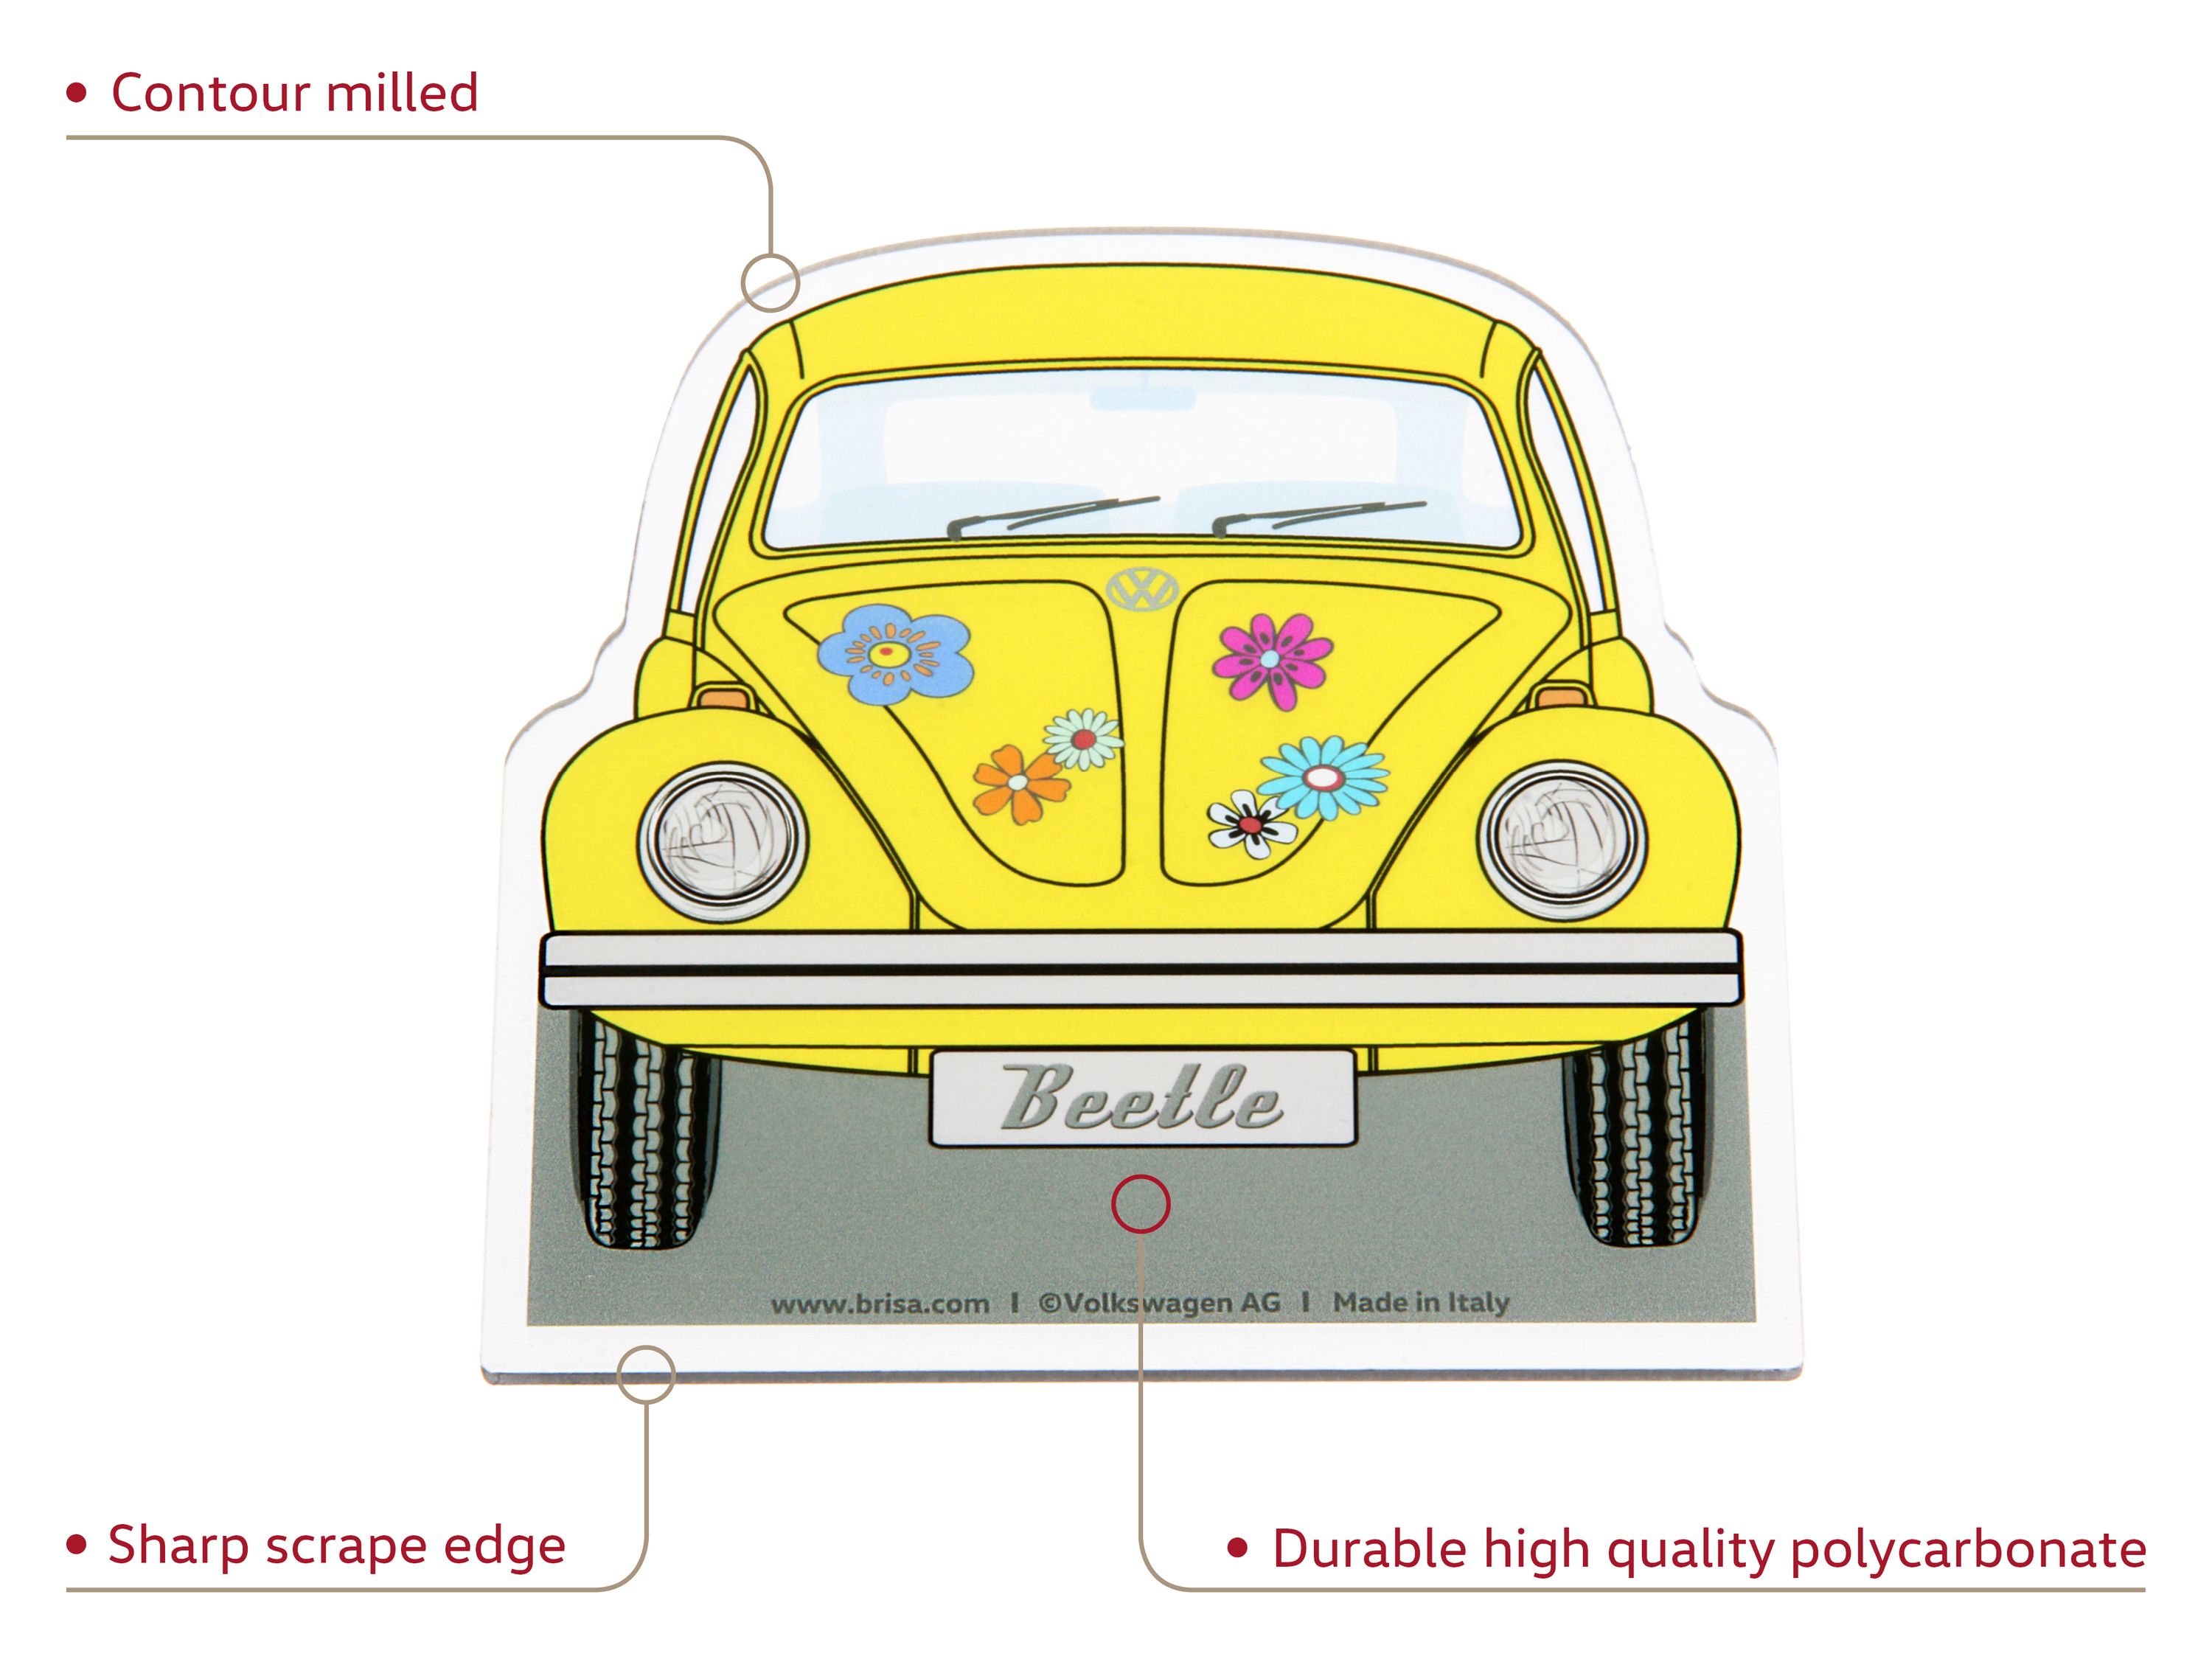 VW Beetle Eiskratzer - gelb